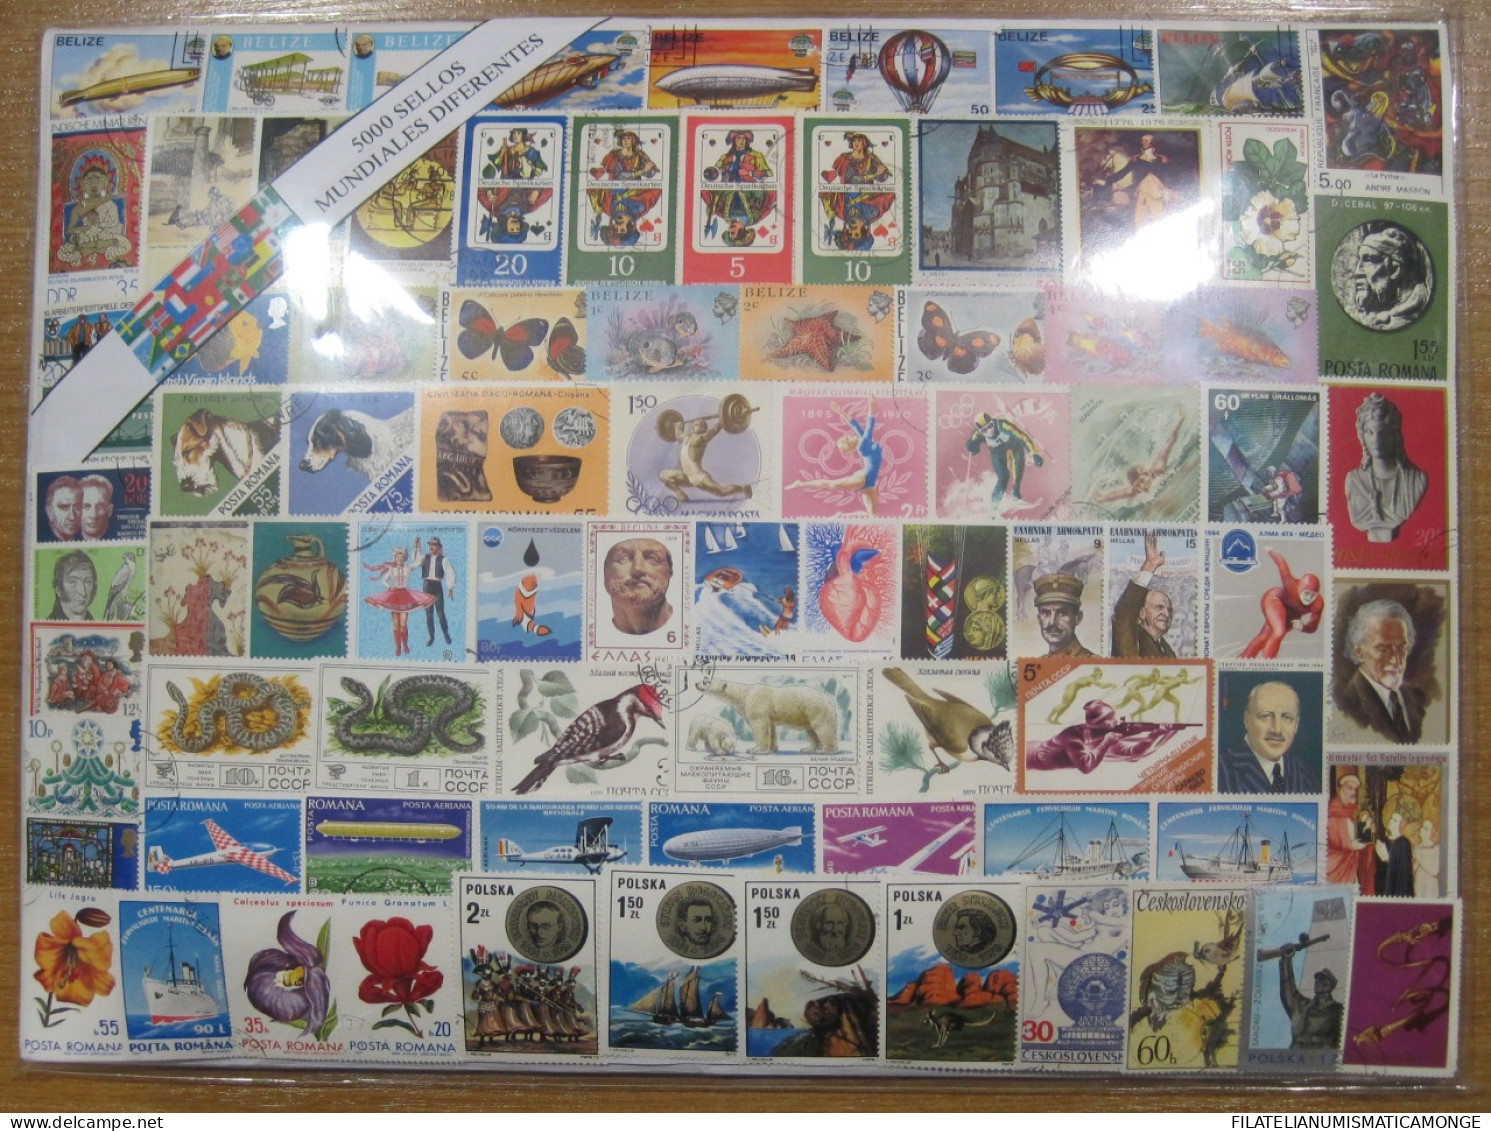  Offer - Lot Stamps - Paqueteria  Mundial 5000 Diferentes / Elegante Presentaci - Kilowaar (min. 1000 Zegels)